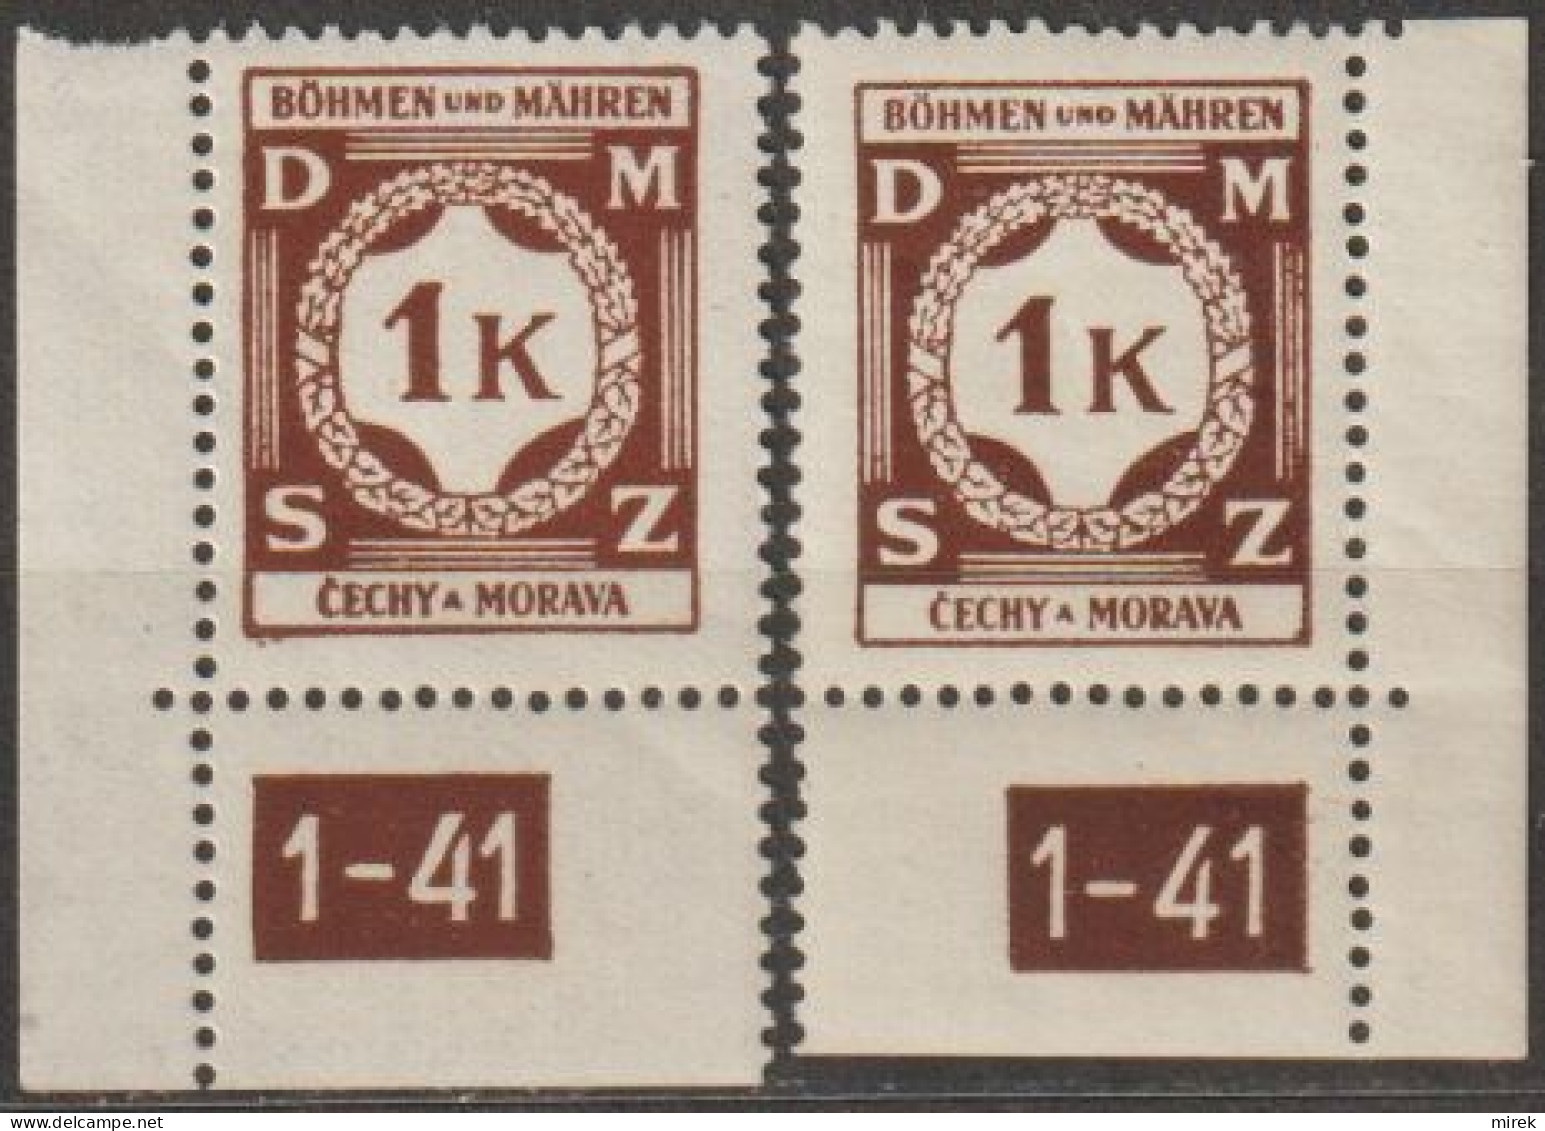 31/ Pof. SL 6, Corner Stamps, Plate Number 1-41 - Unused Stamps